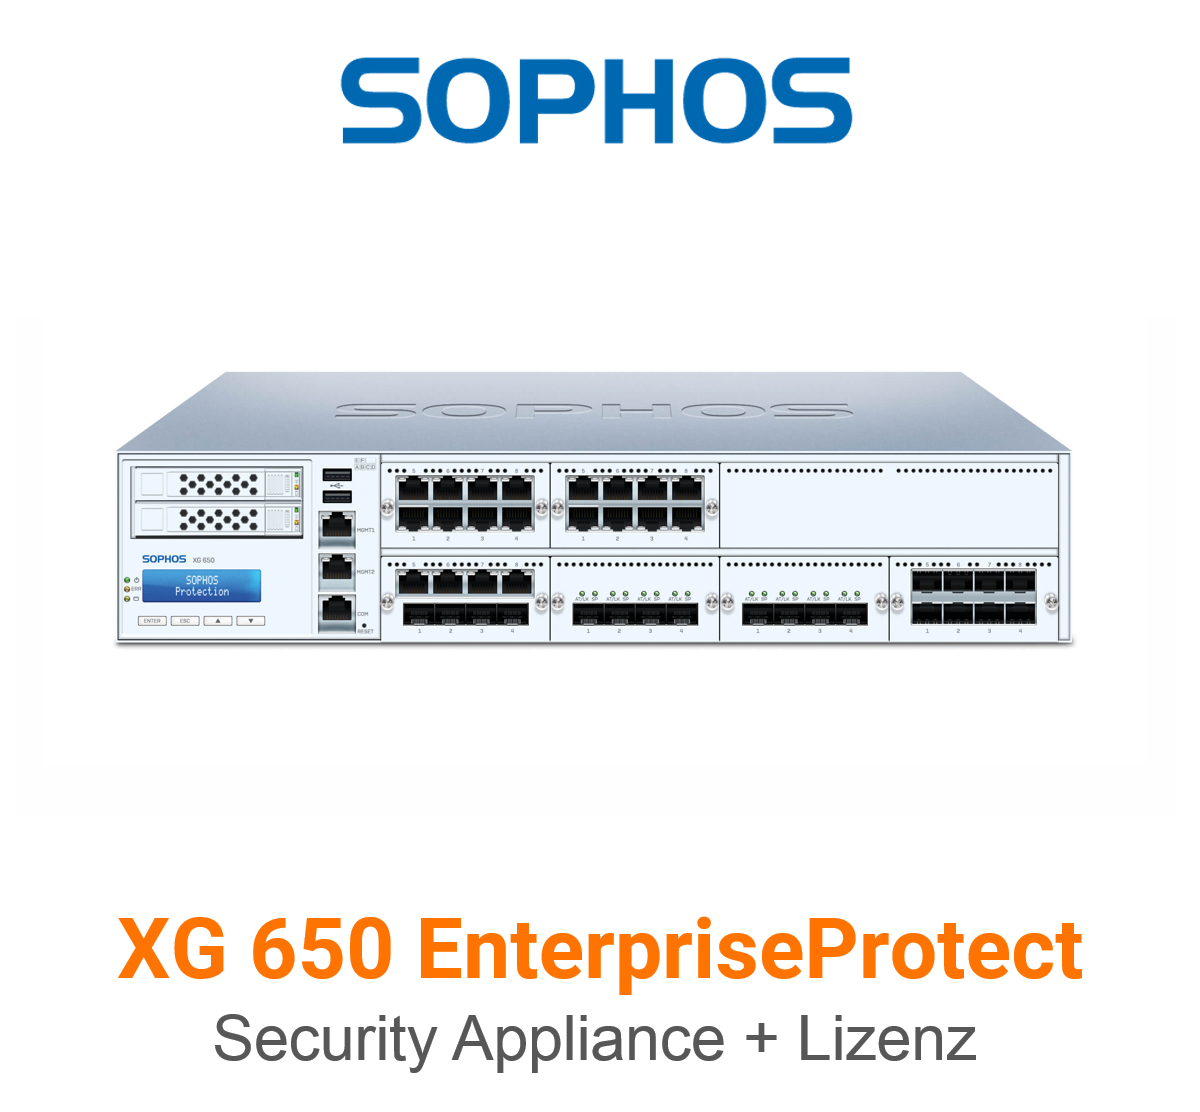 Sophos XG 650 EnterpriseProtect Bundle (Hardware + Lizenz)